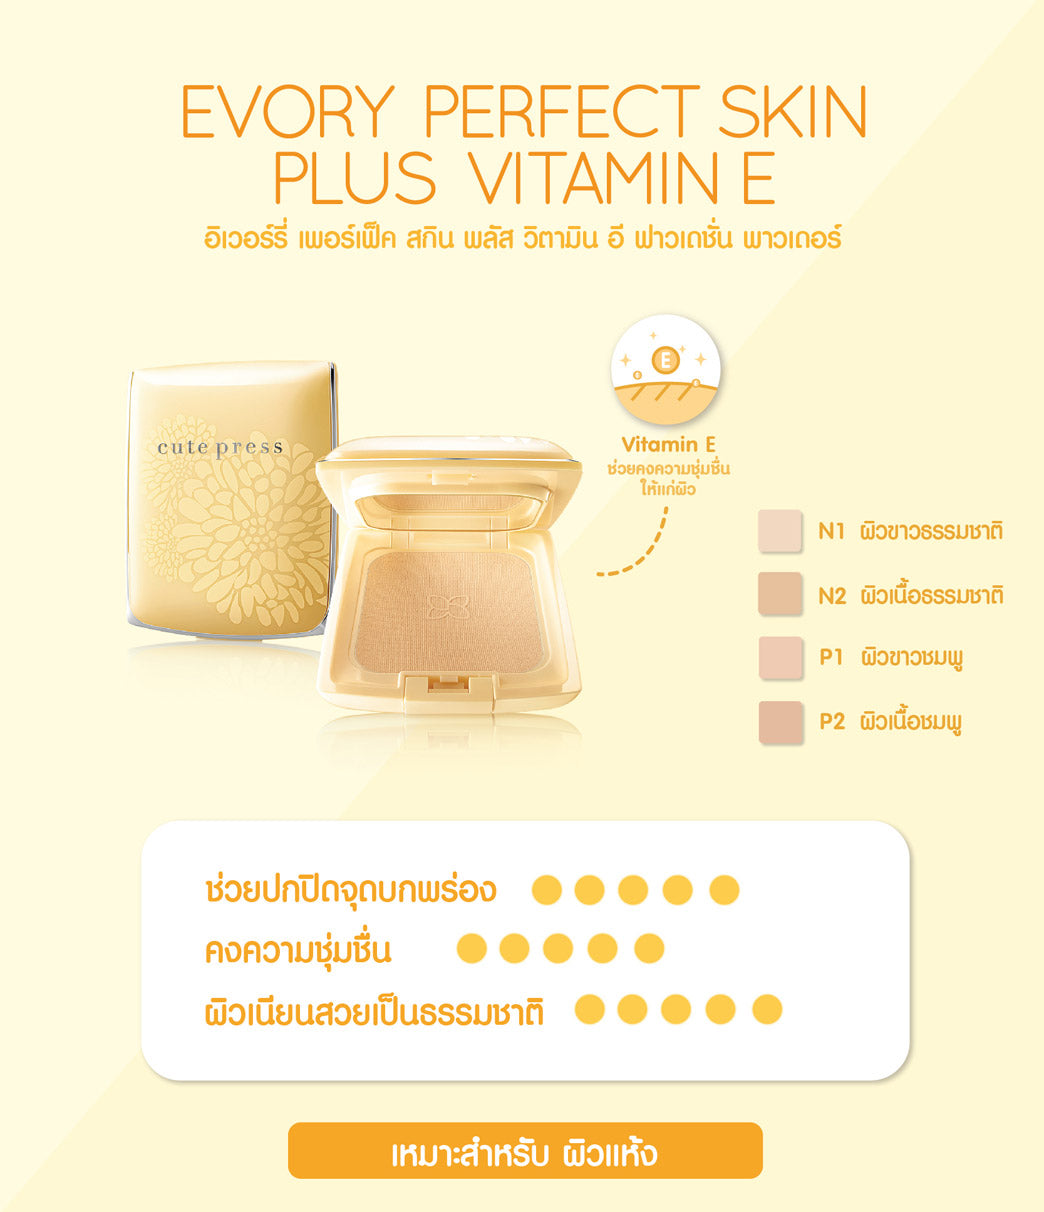 Cute Press Evory Perfect Vitamin E Powder : cutepress คิวเพรส แป้ง อิเวอร์รี่ ตลับจริง